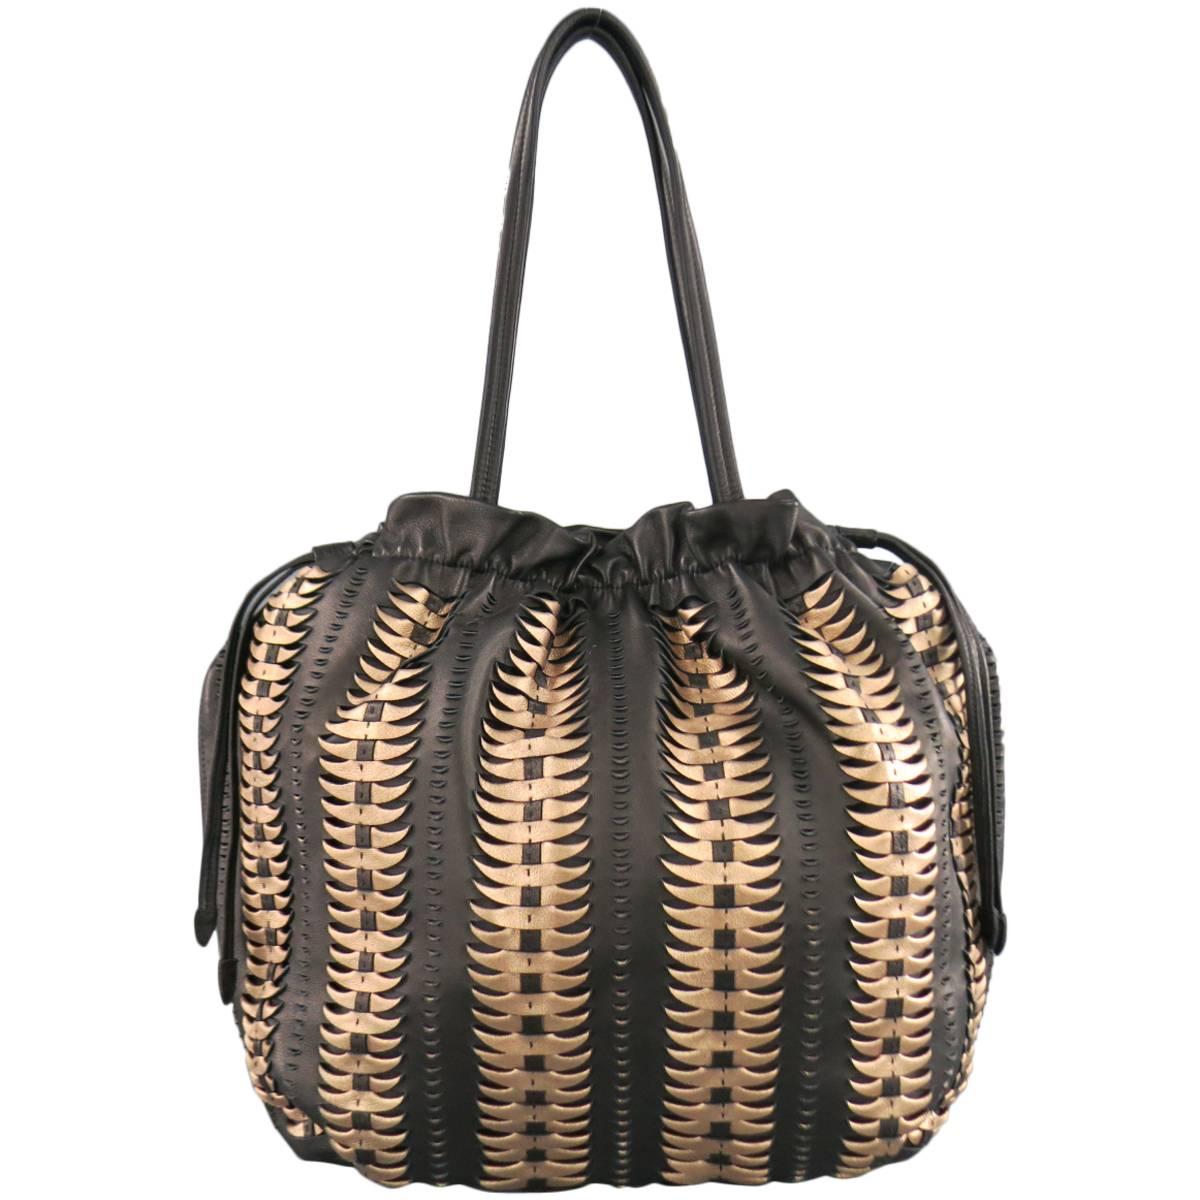 ELIE TAHARI Black & Copper Woven Leather Drawstring Tote Bag